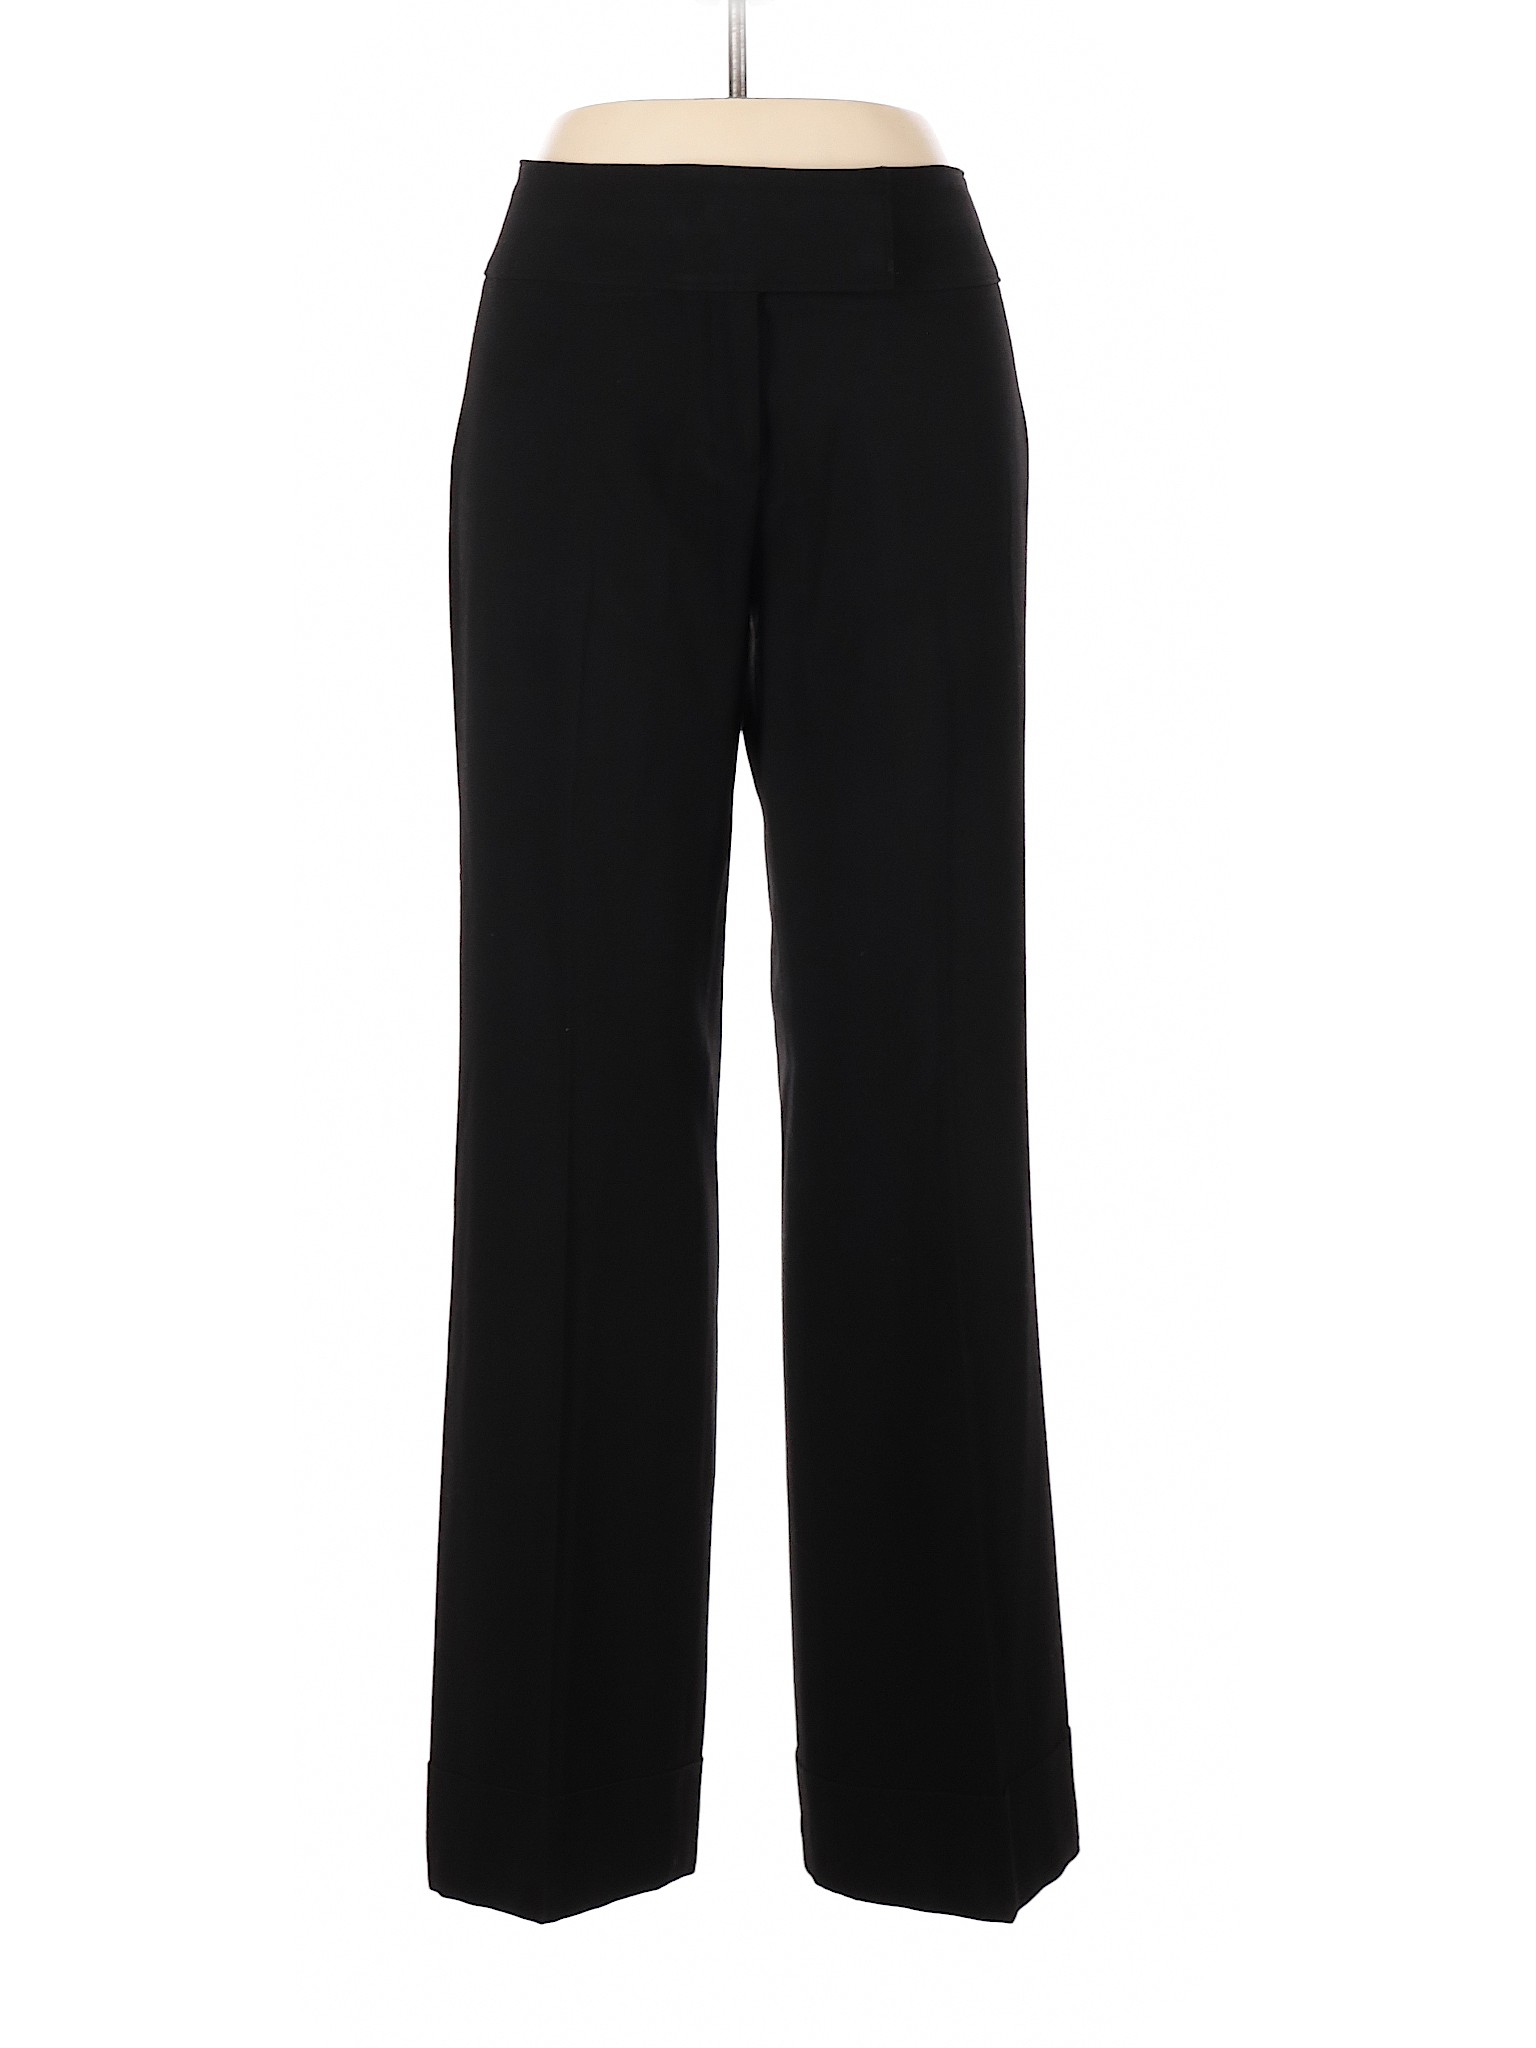 Dalia Women Black Dress Pants 8 | eBay